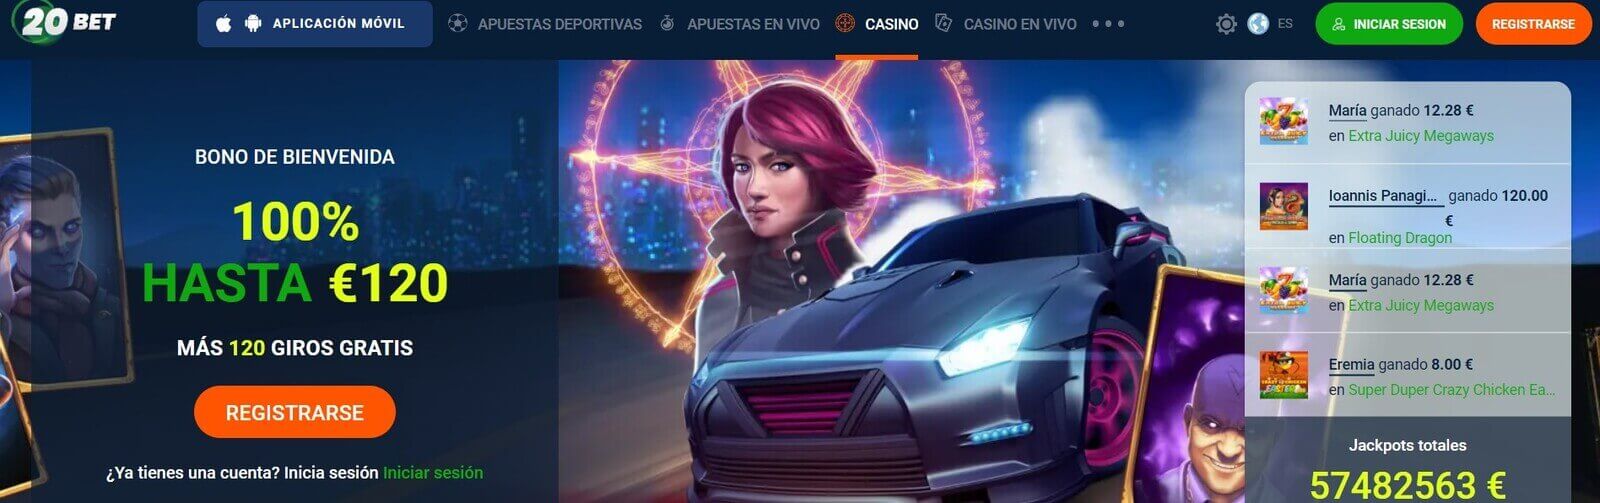 20Bet Casino online en Argentina para jugar en pesos